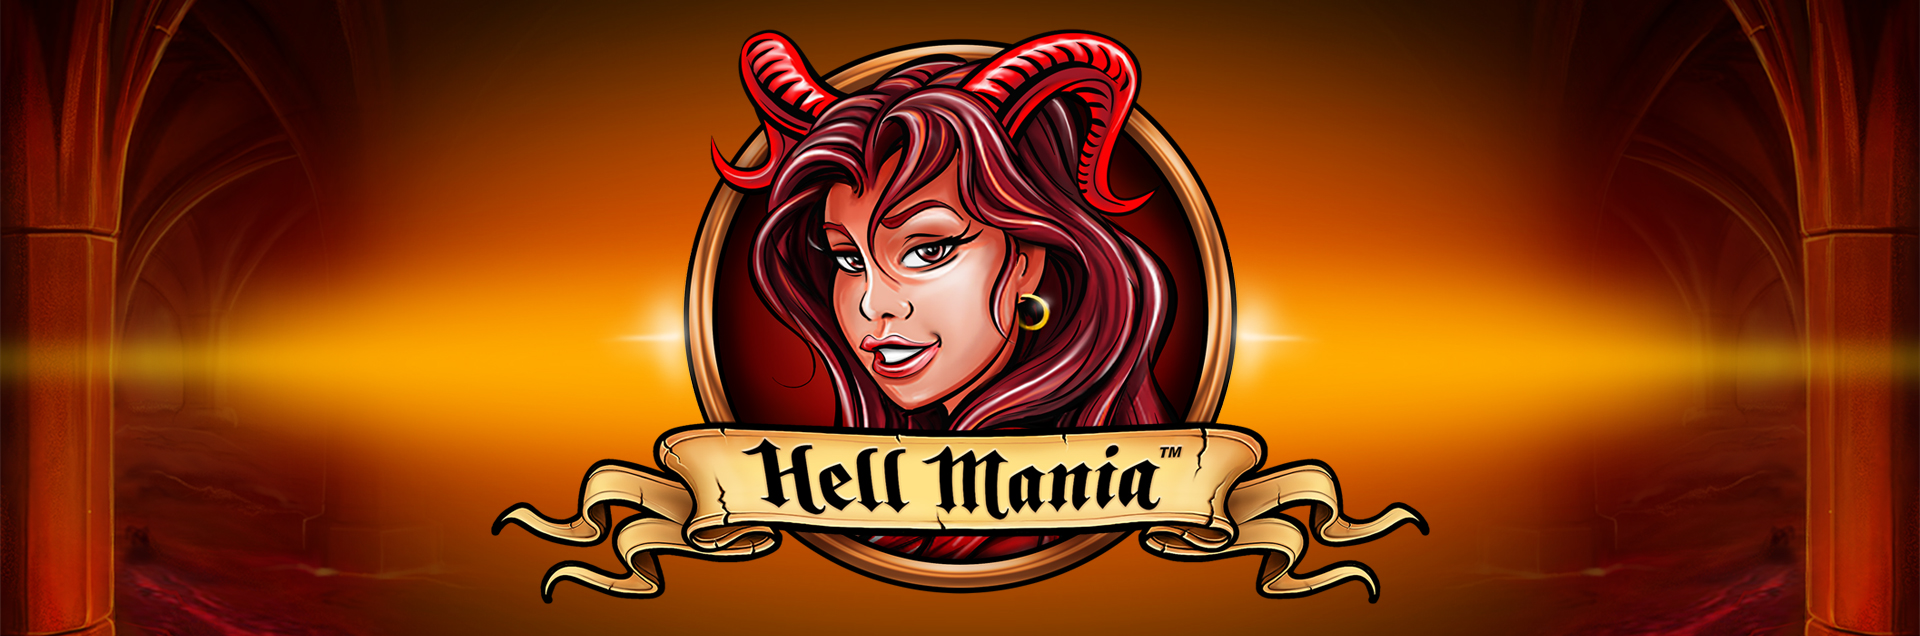 HellMania logo